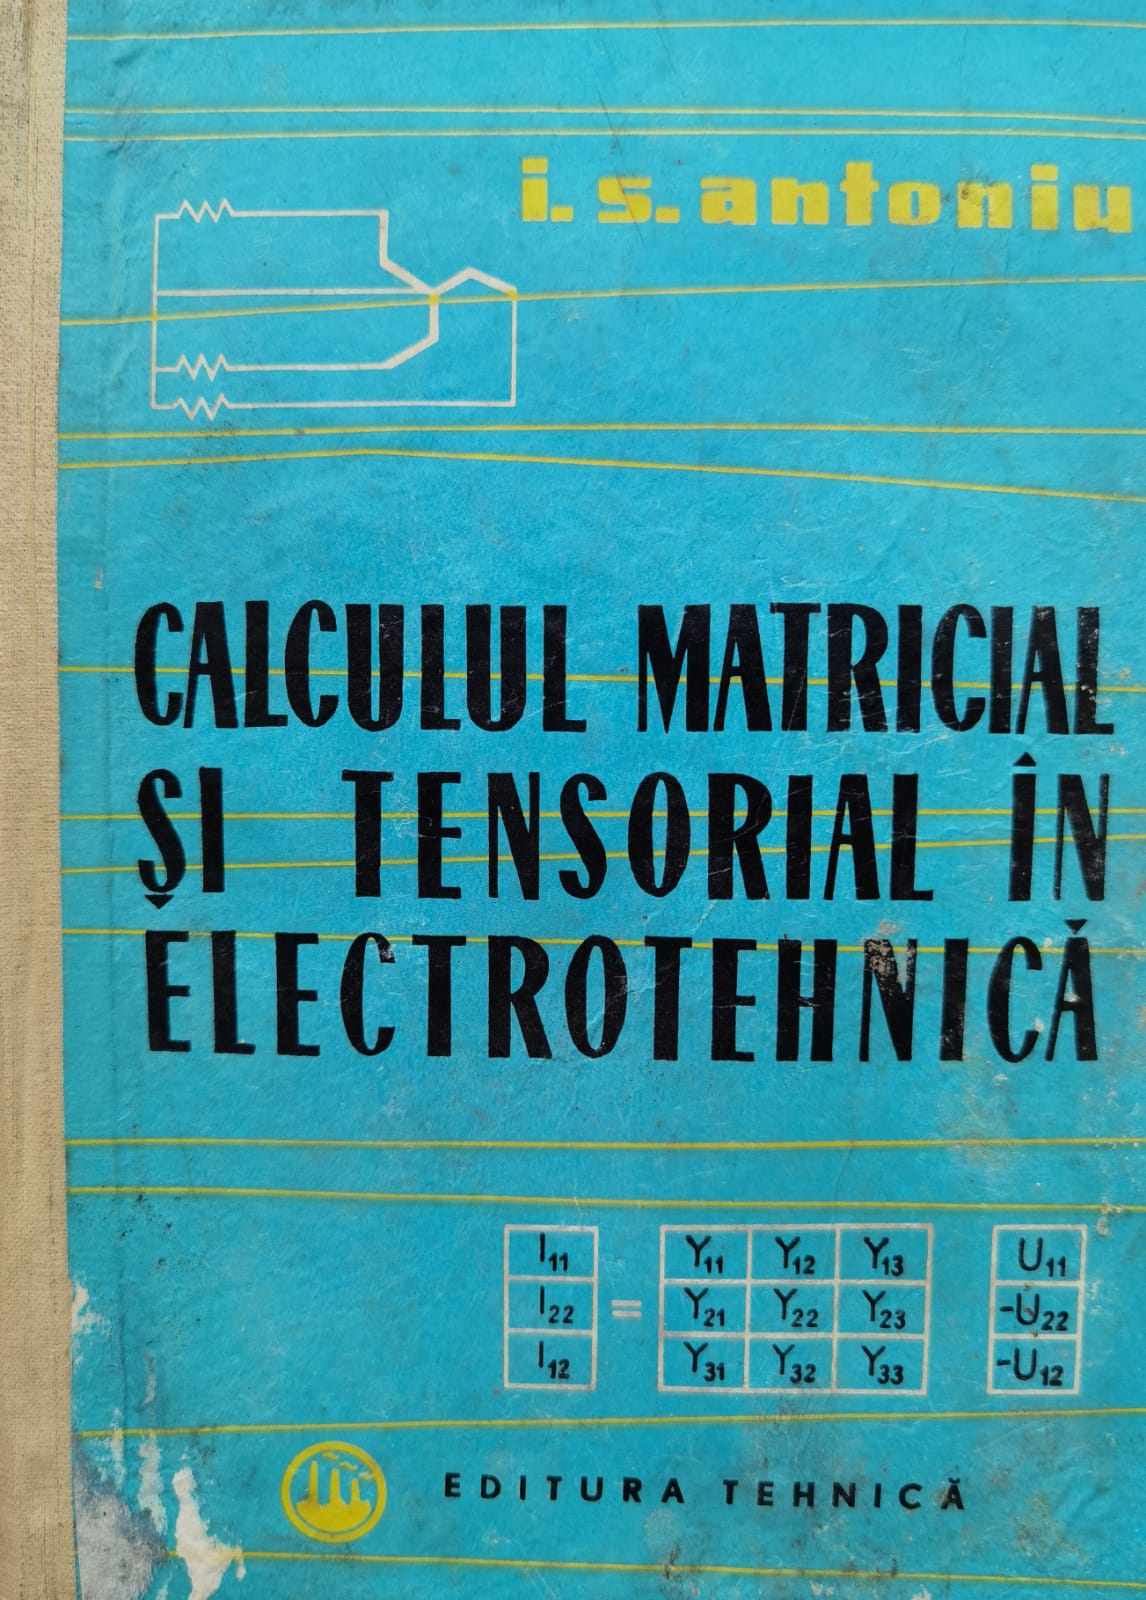 calculul matricial si tensorial in electrotehnica                                                    i. s. antoniu                                                                                       